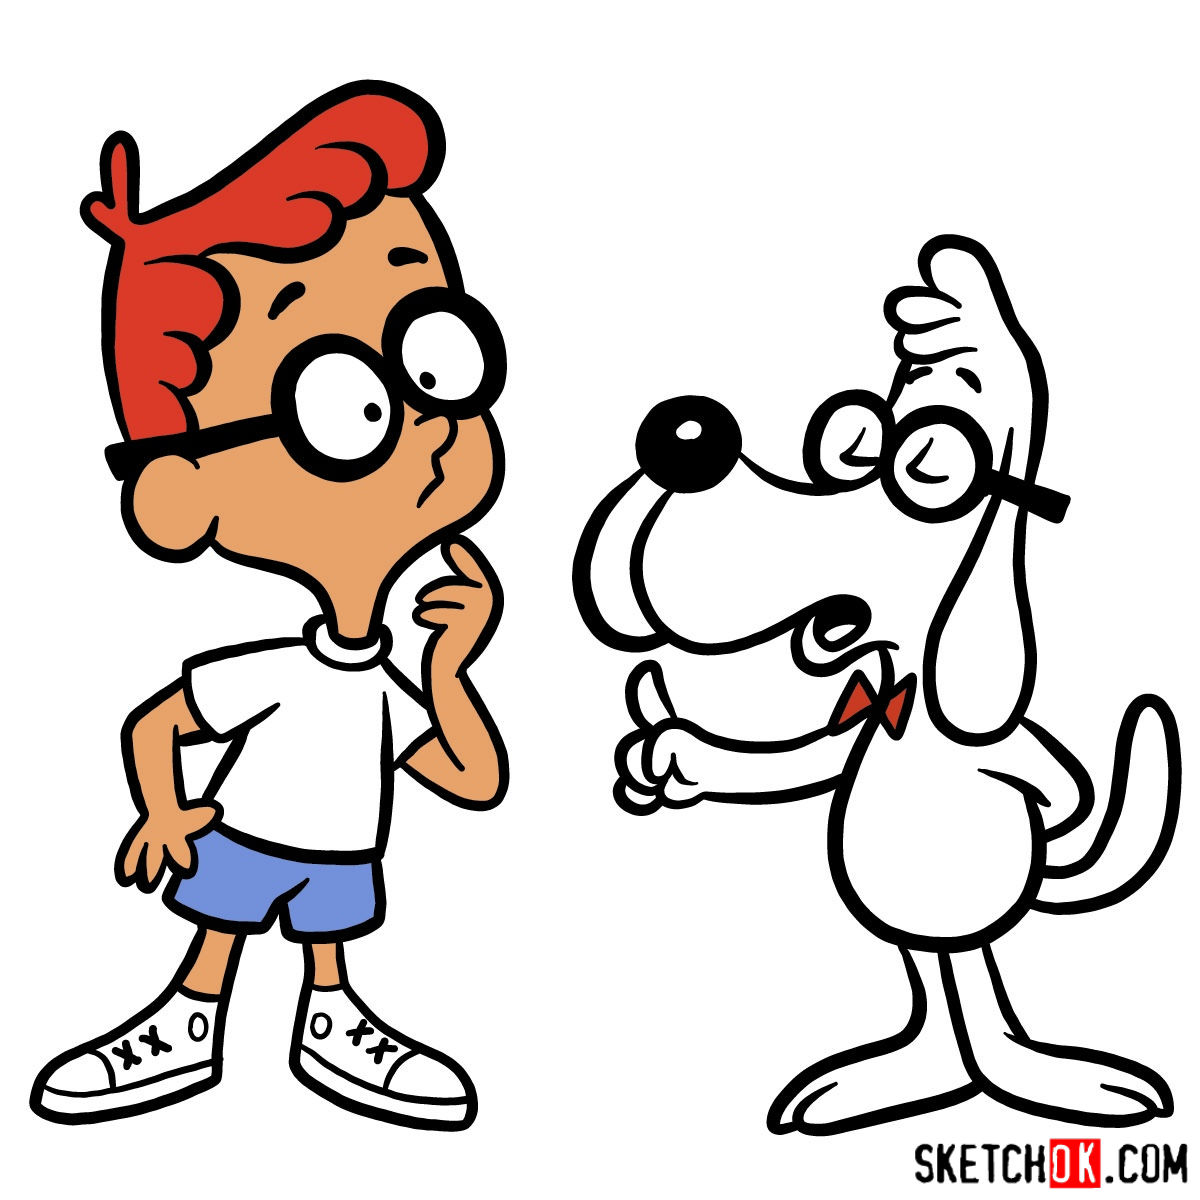 How to draw Mr. Peabody & Sherman